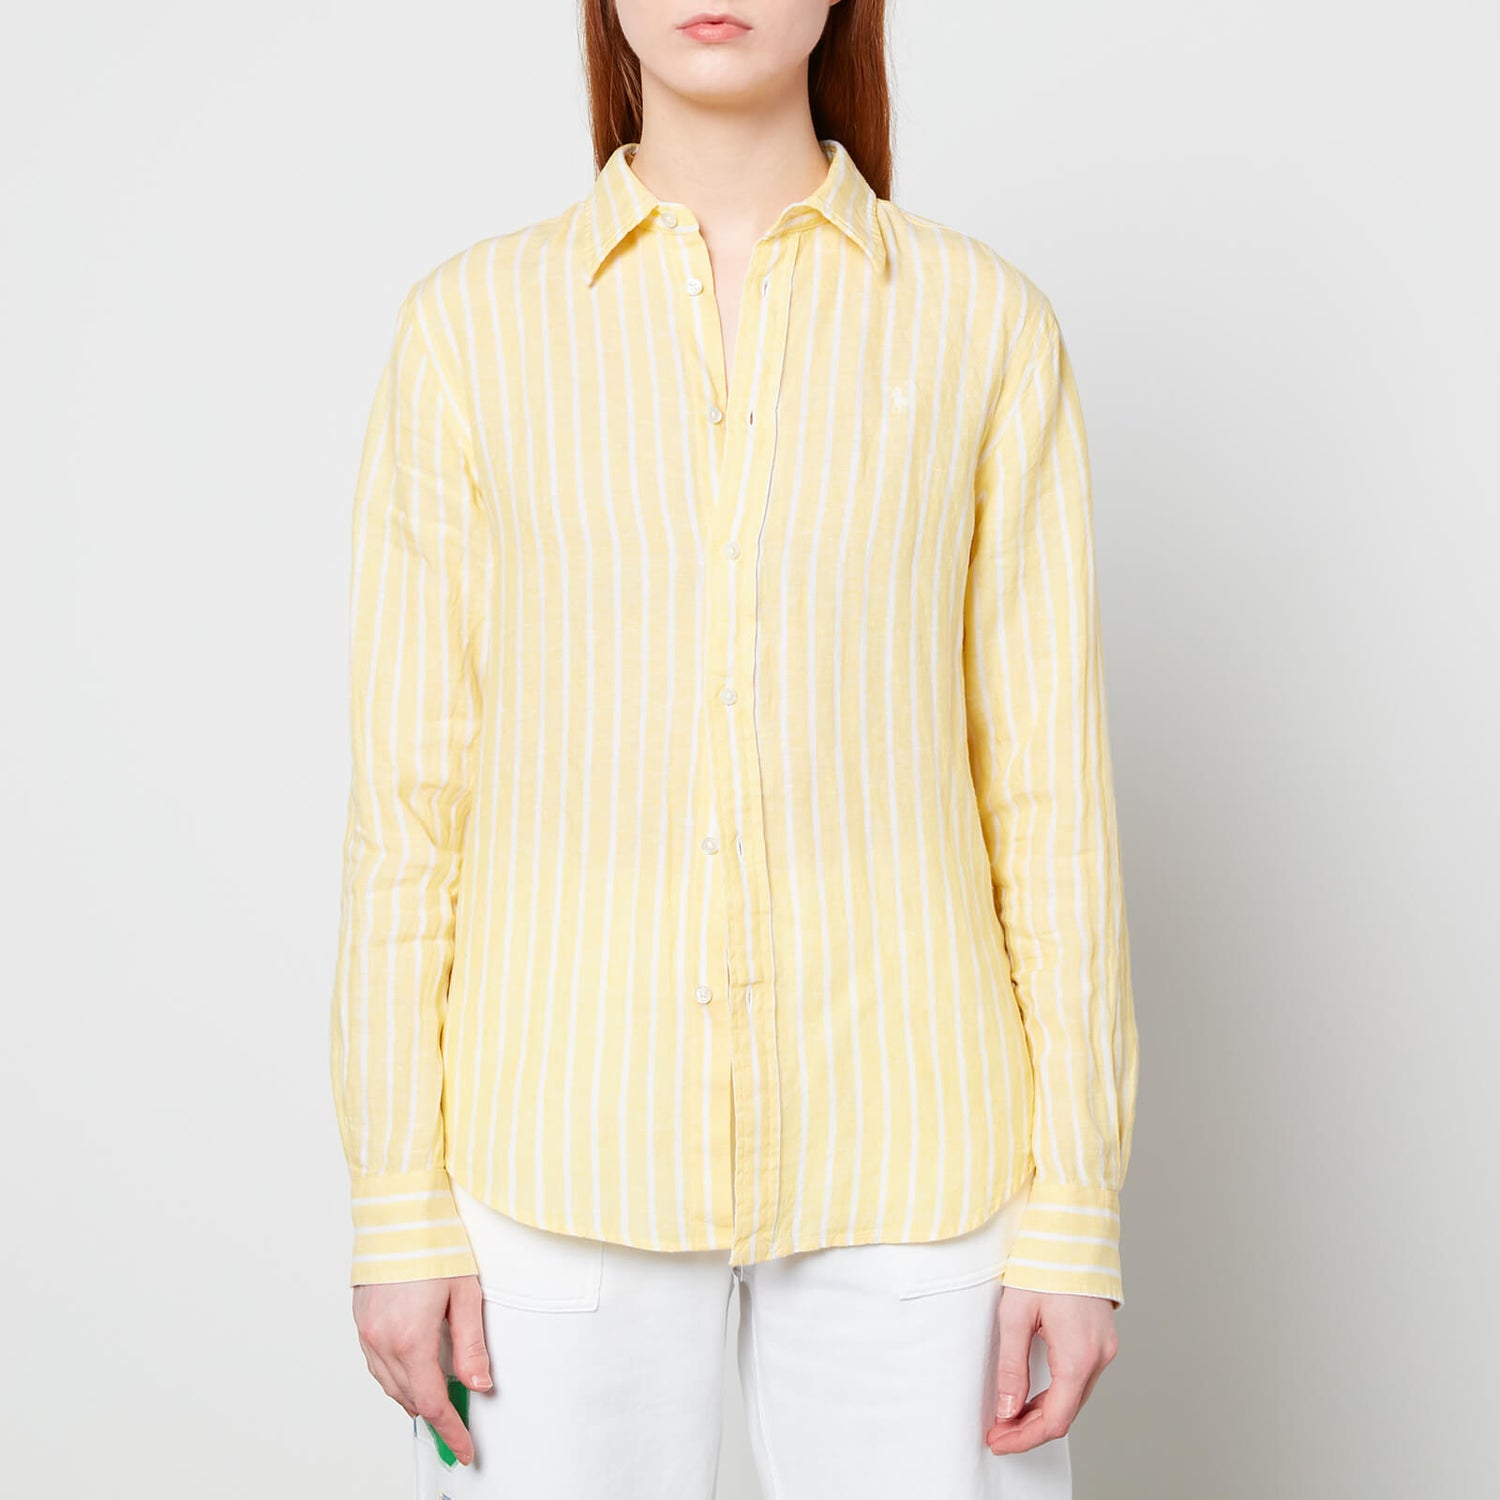 Polo Ralph Lauren Women's Relaxed Shirt - 1178 Oasis Yellow/White - S